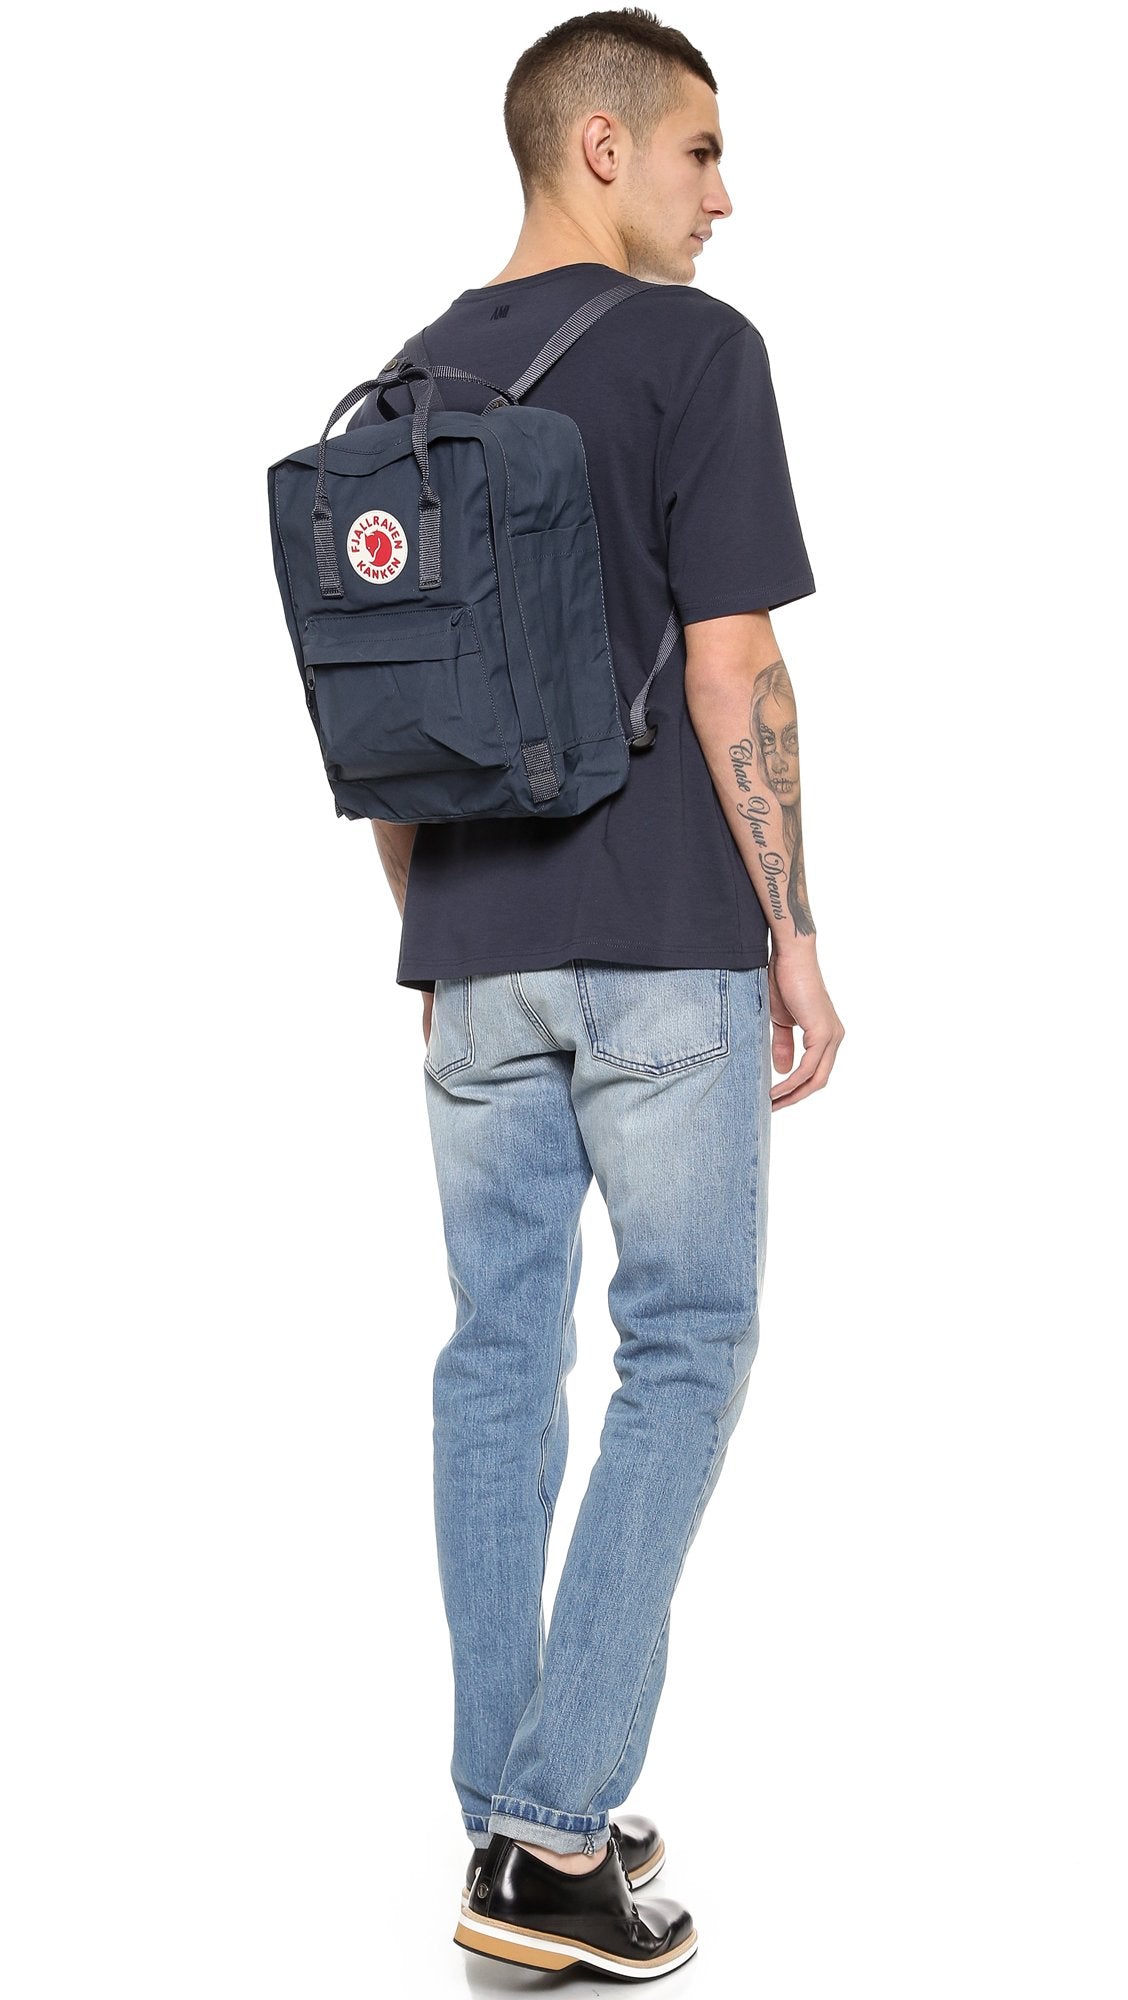 Fjallraven, Kanken Classic Backpack for Everyday